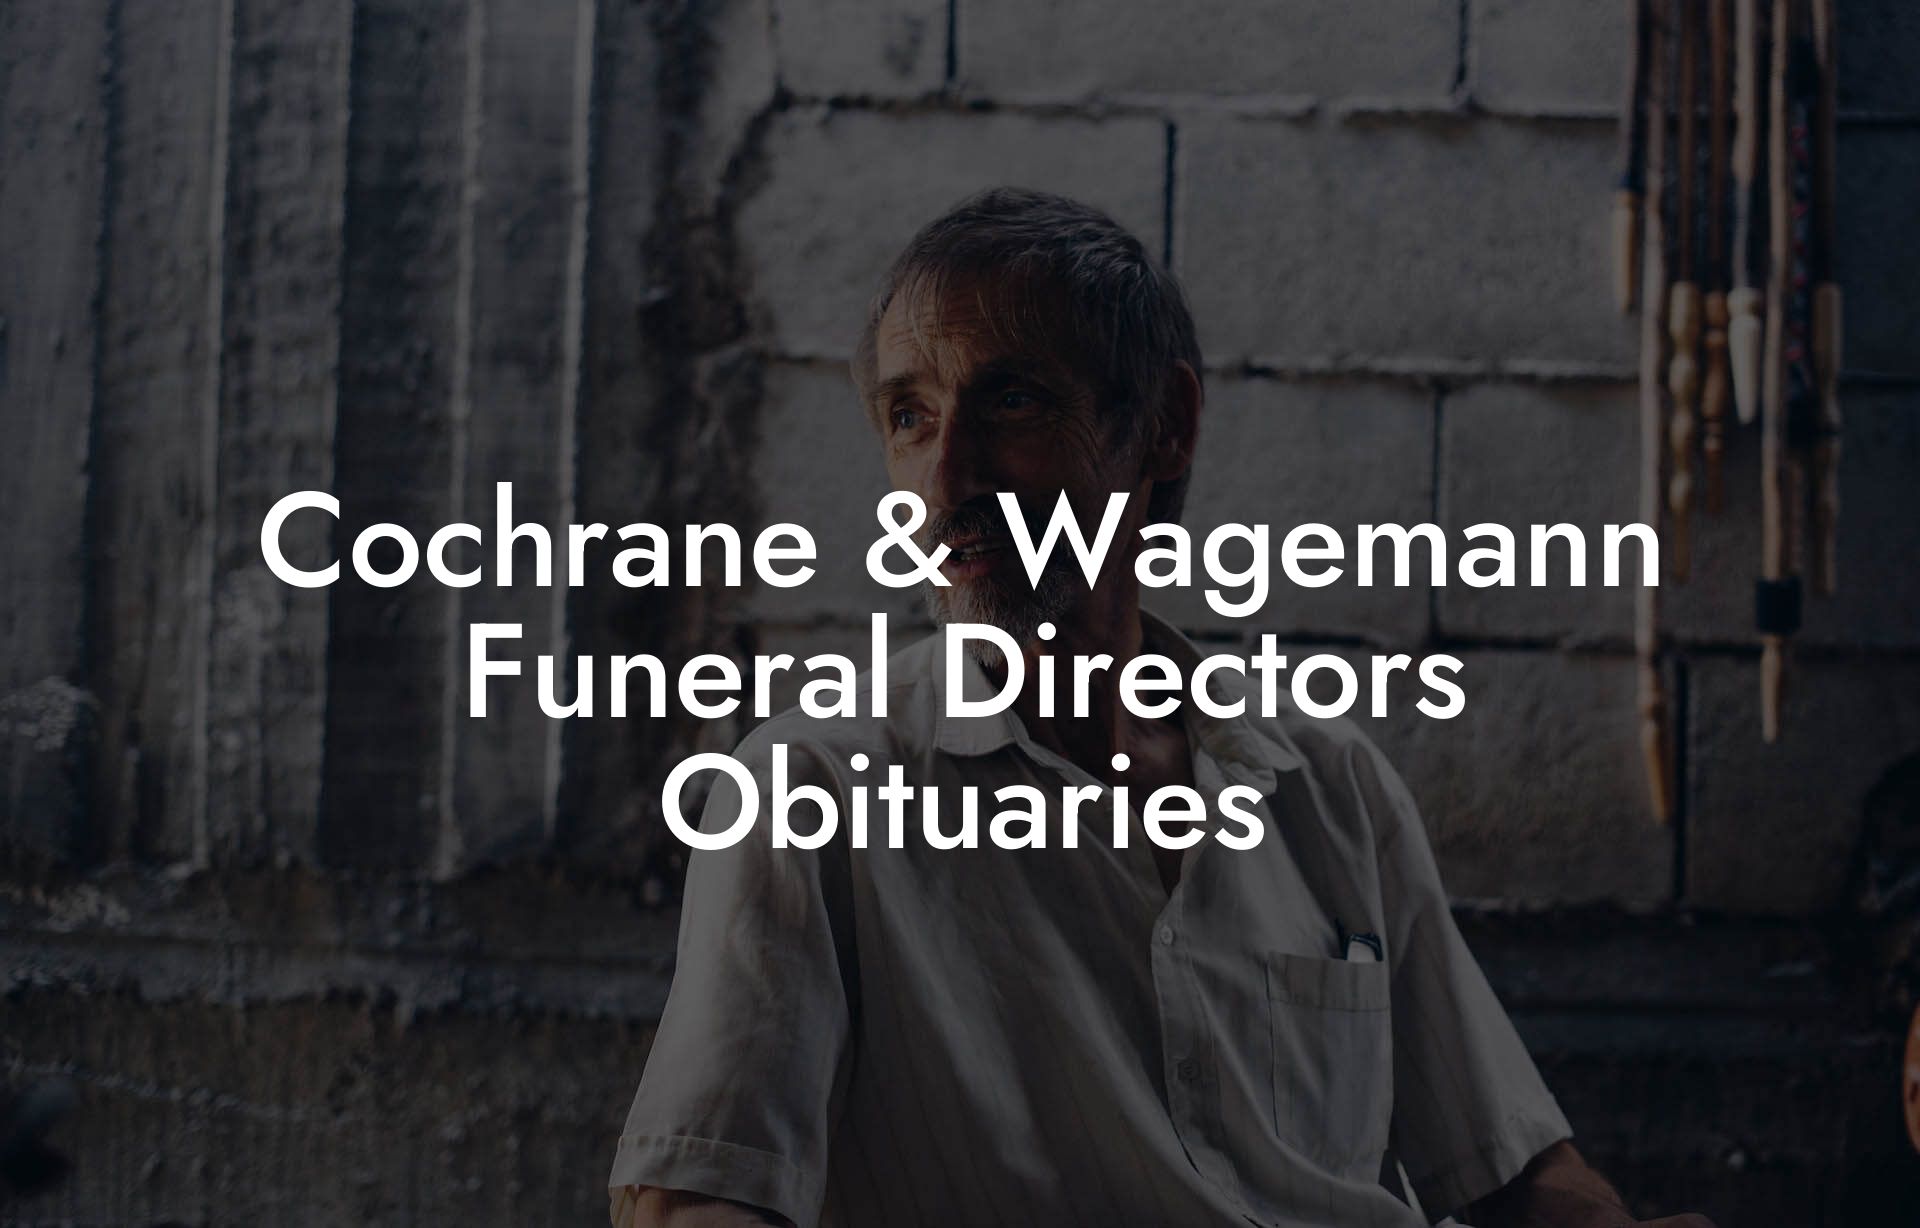 Cochrane & Wagemann Funeral Directors Obituaries